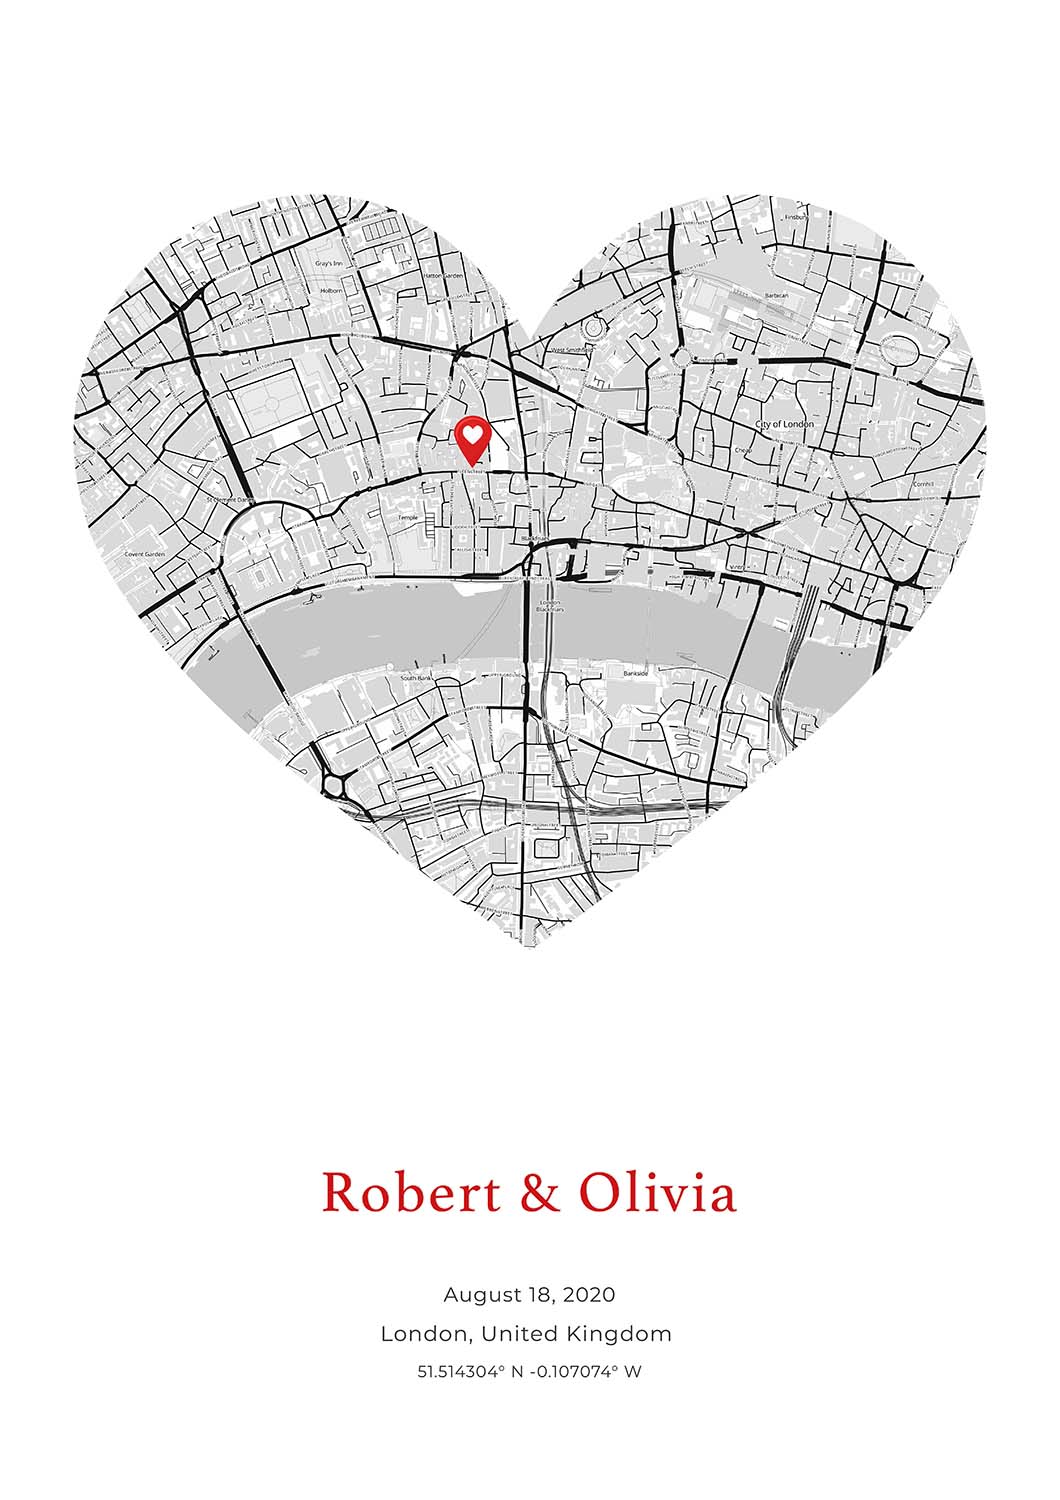 Mapa en forma de corazón: regalo personalizado de mapa antiguo o moderno